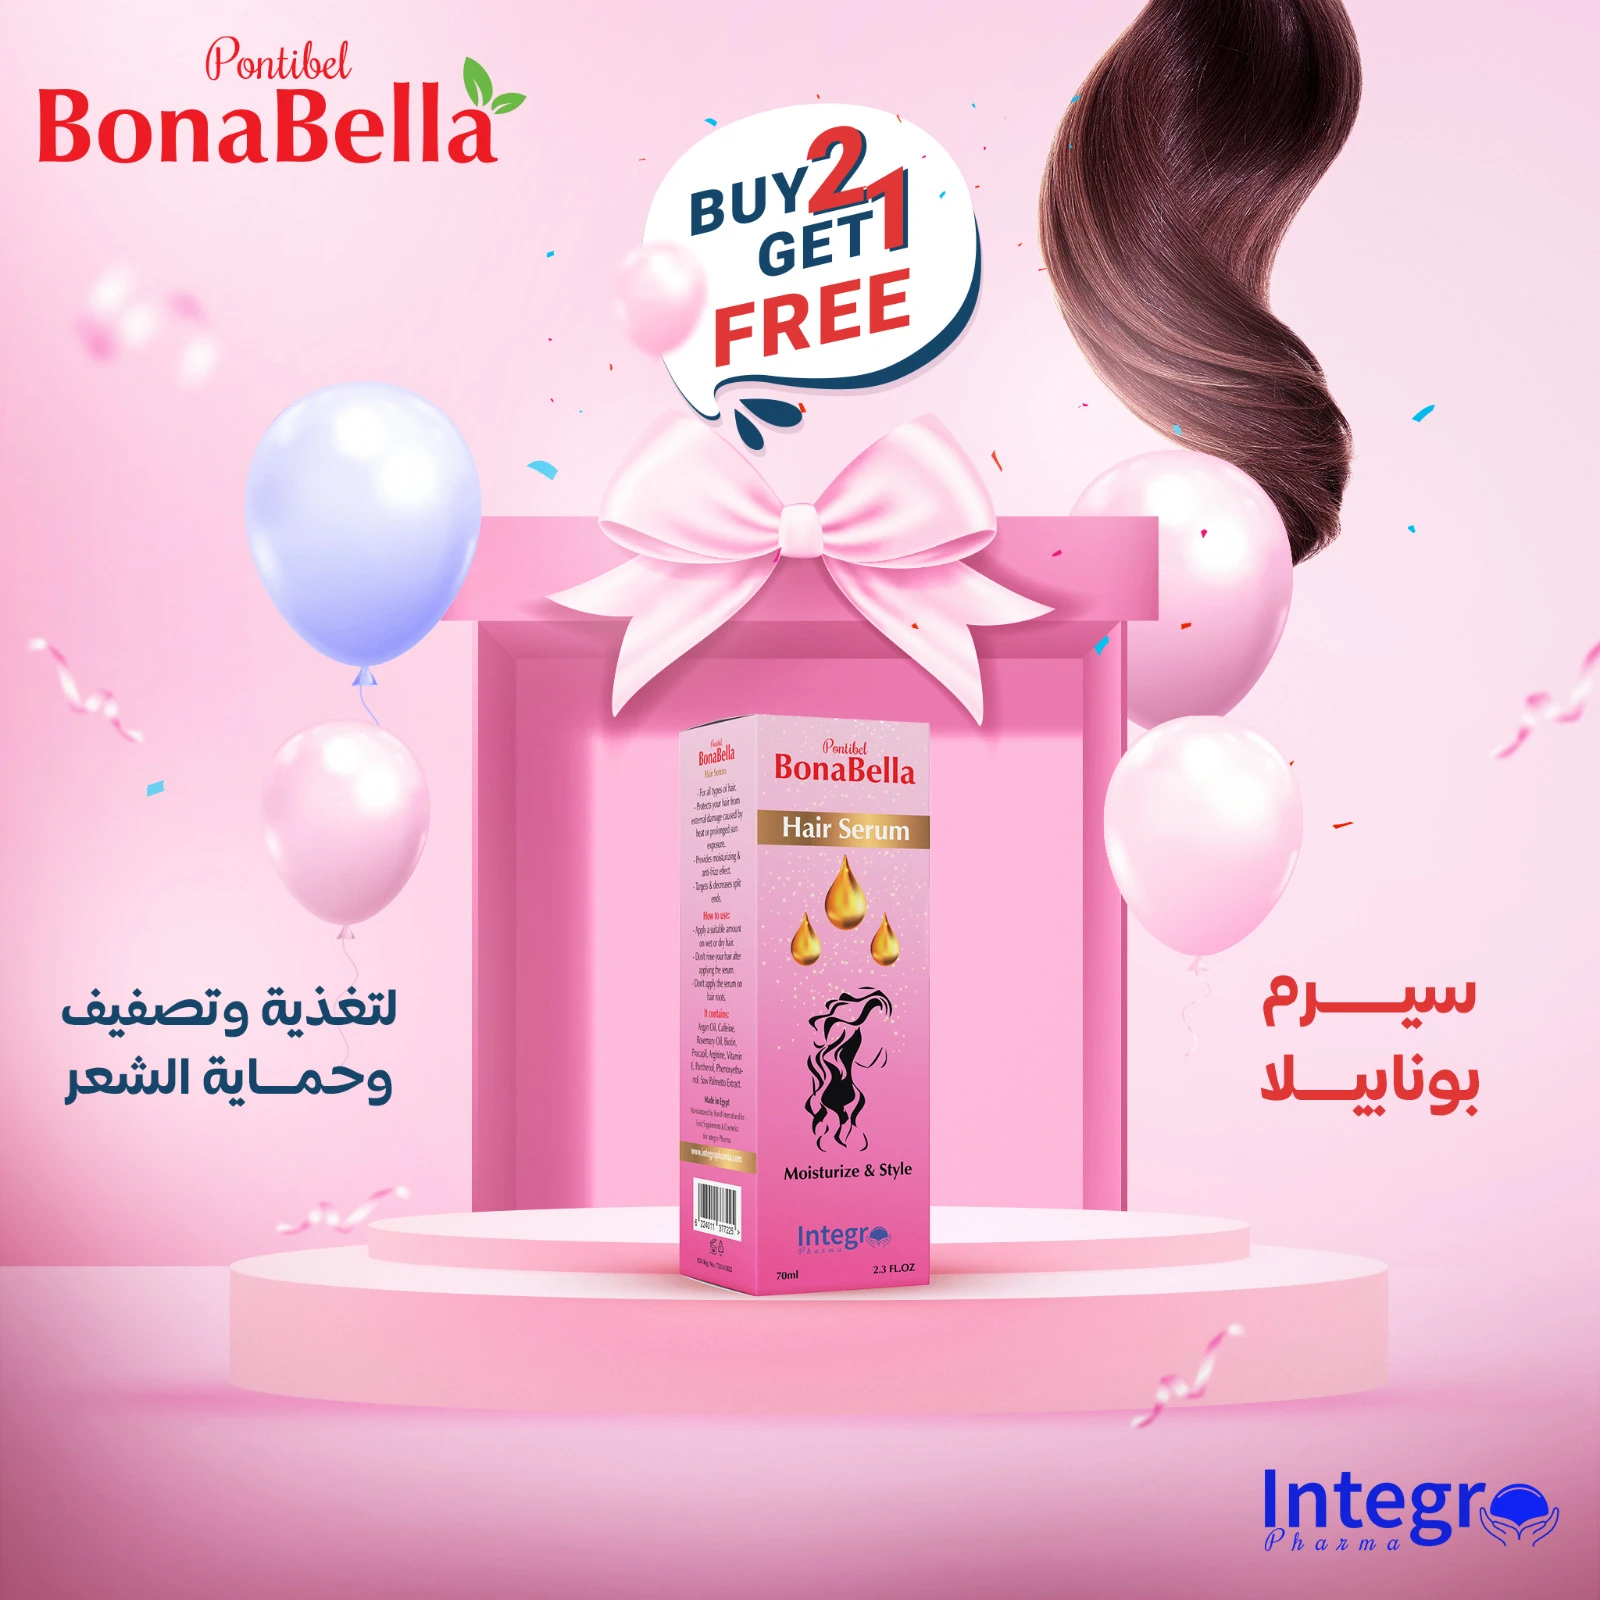 Buy 2 Get 1 free - BonaBella Hair Serum 70ml